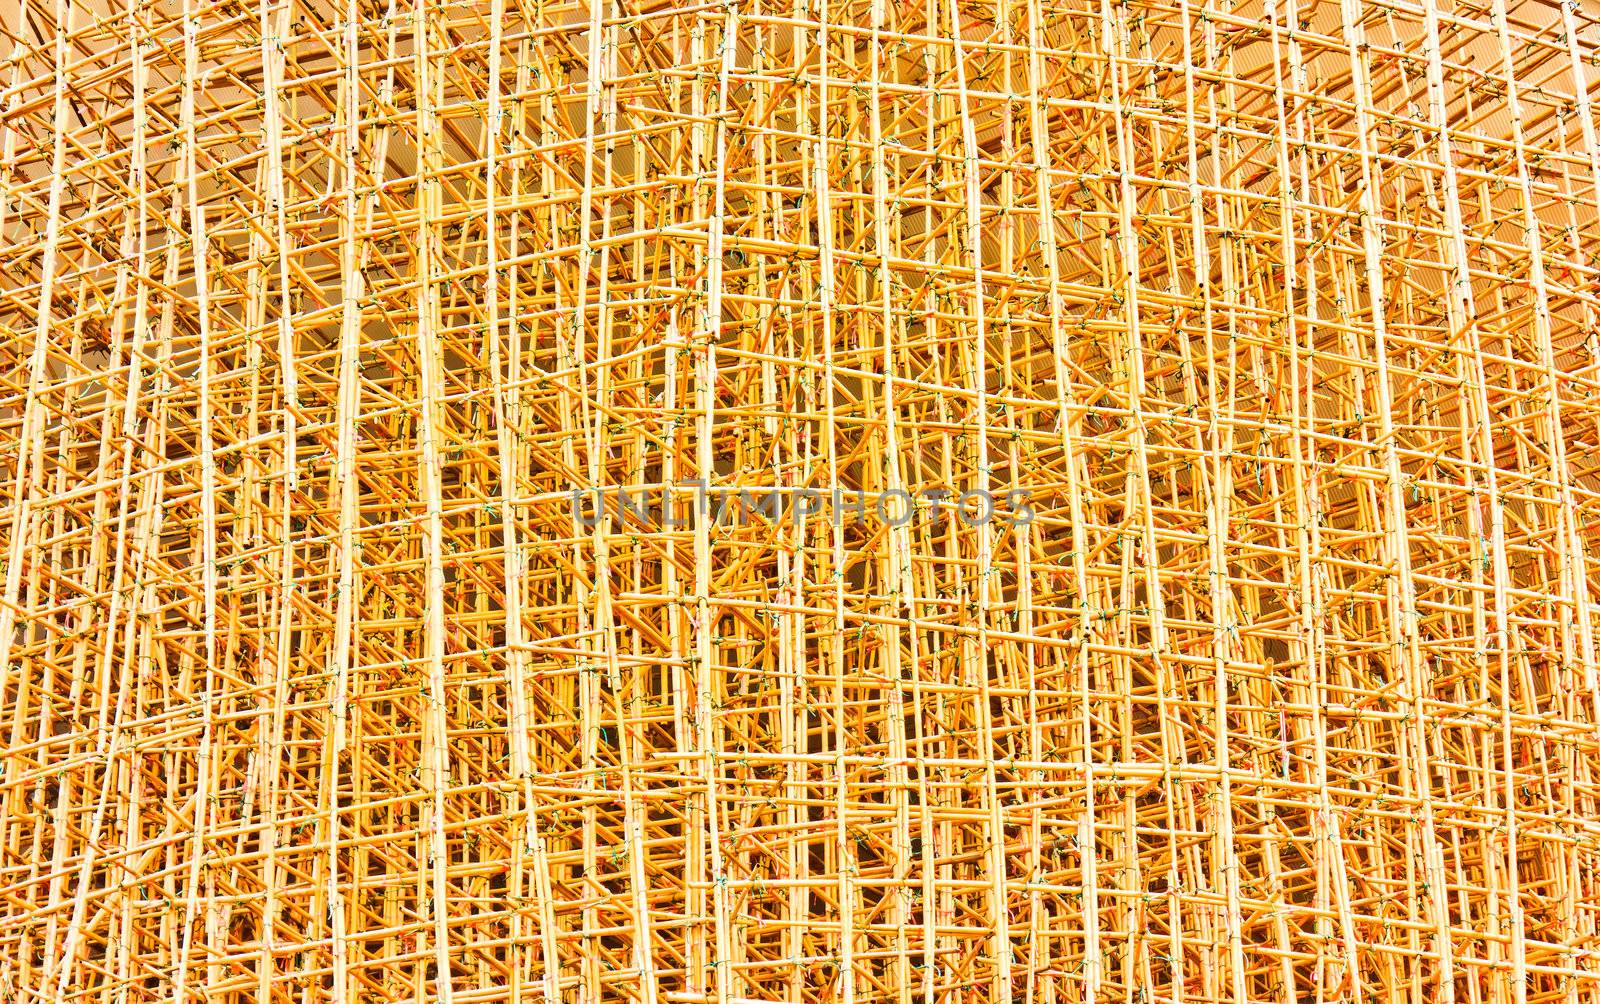 Bamboo scaffolding yellow background.